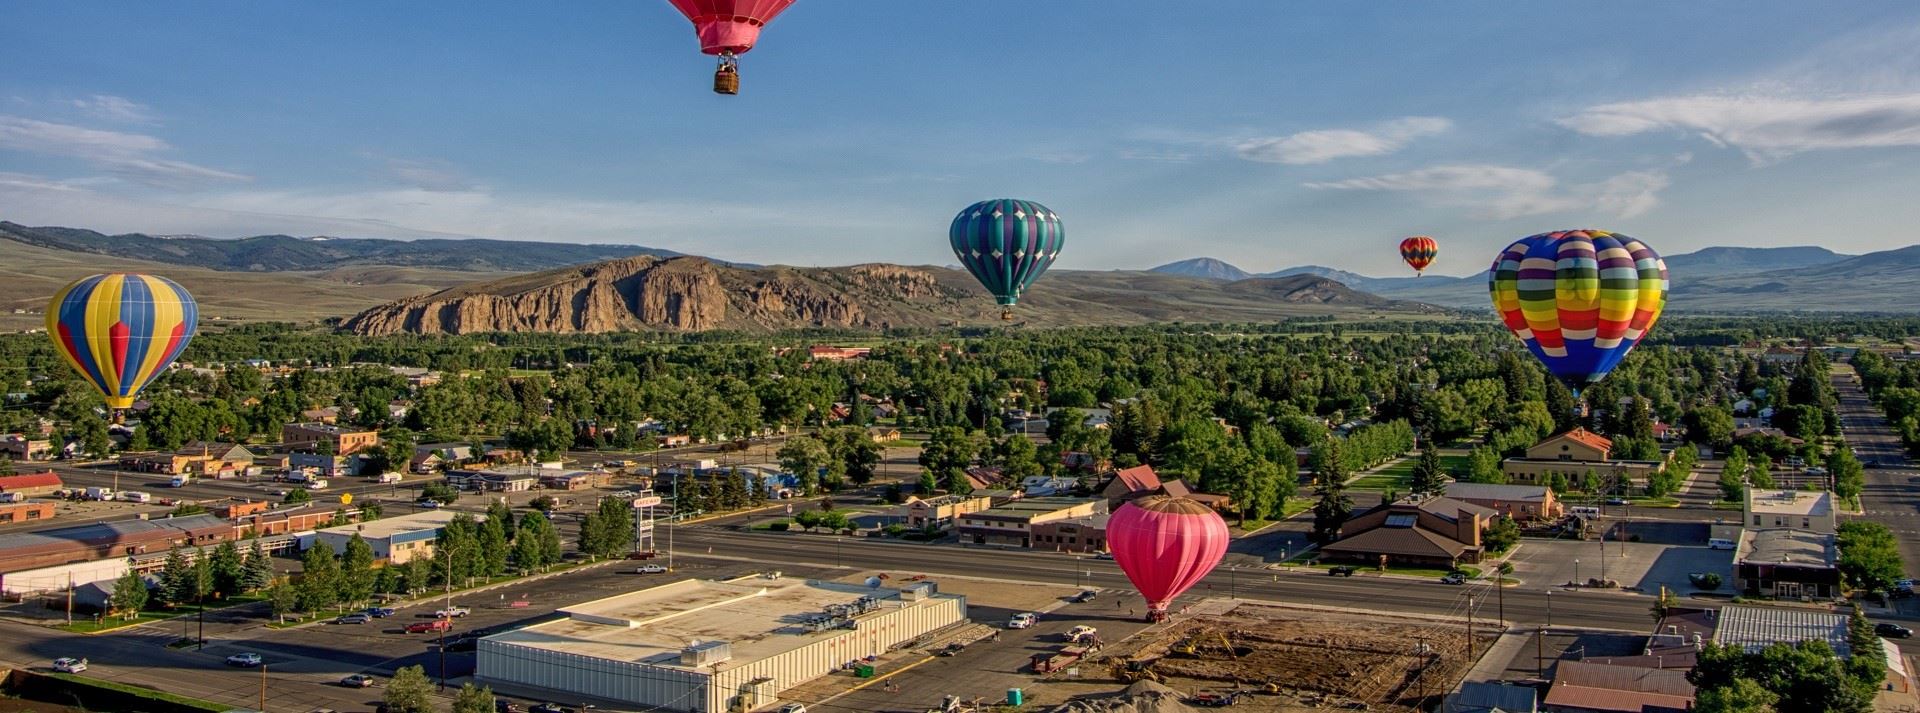 Hot air balloons above a town 